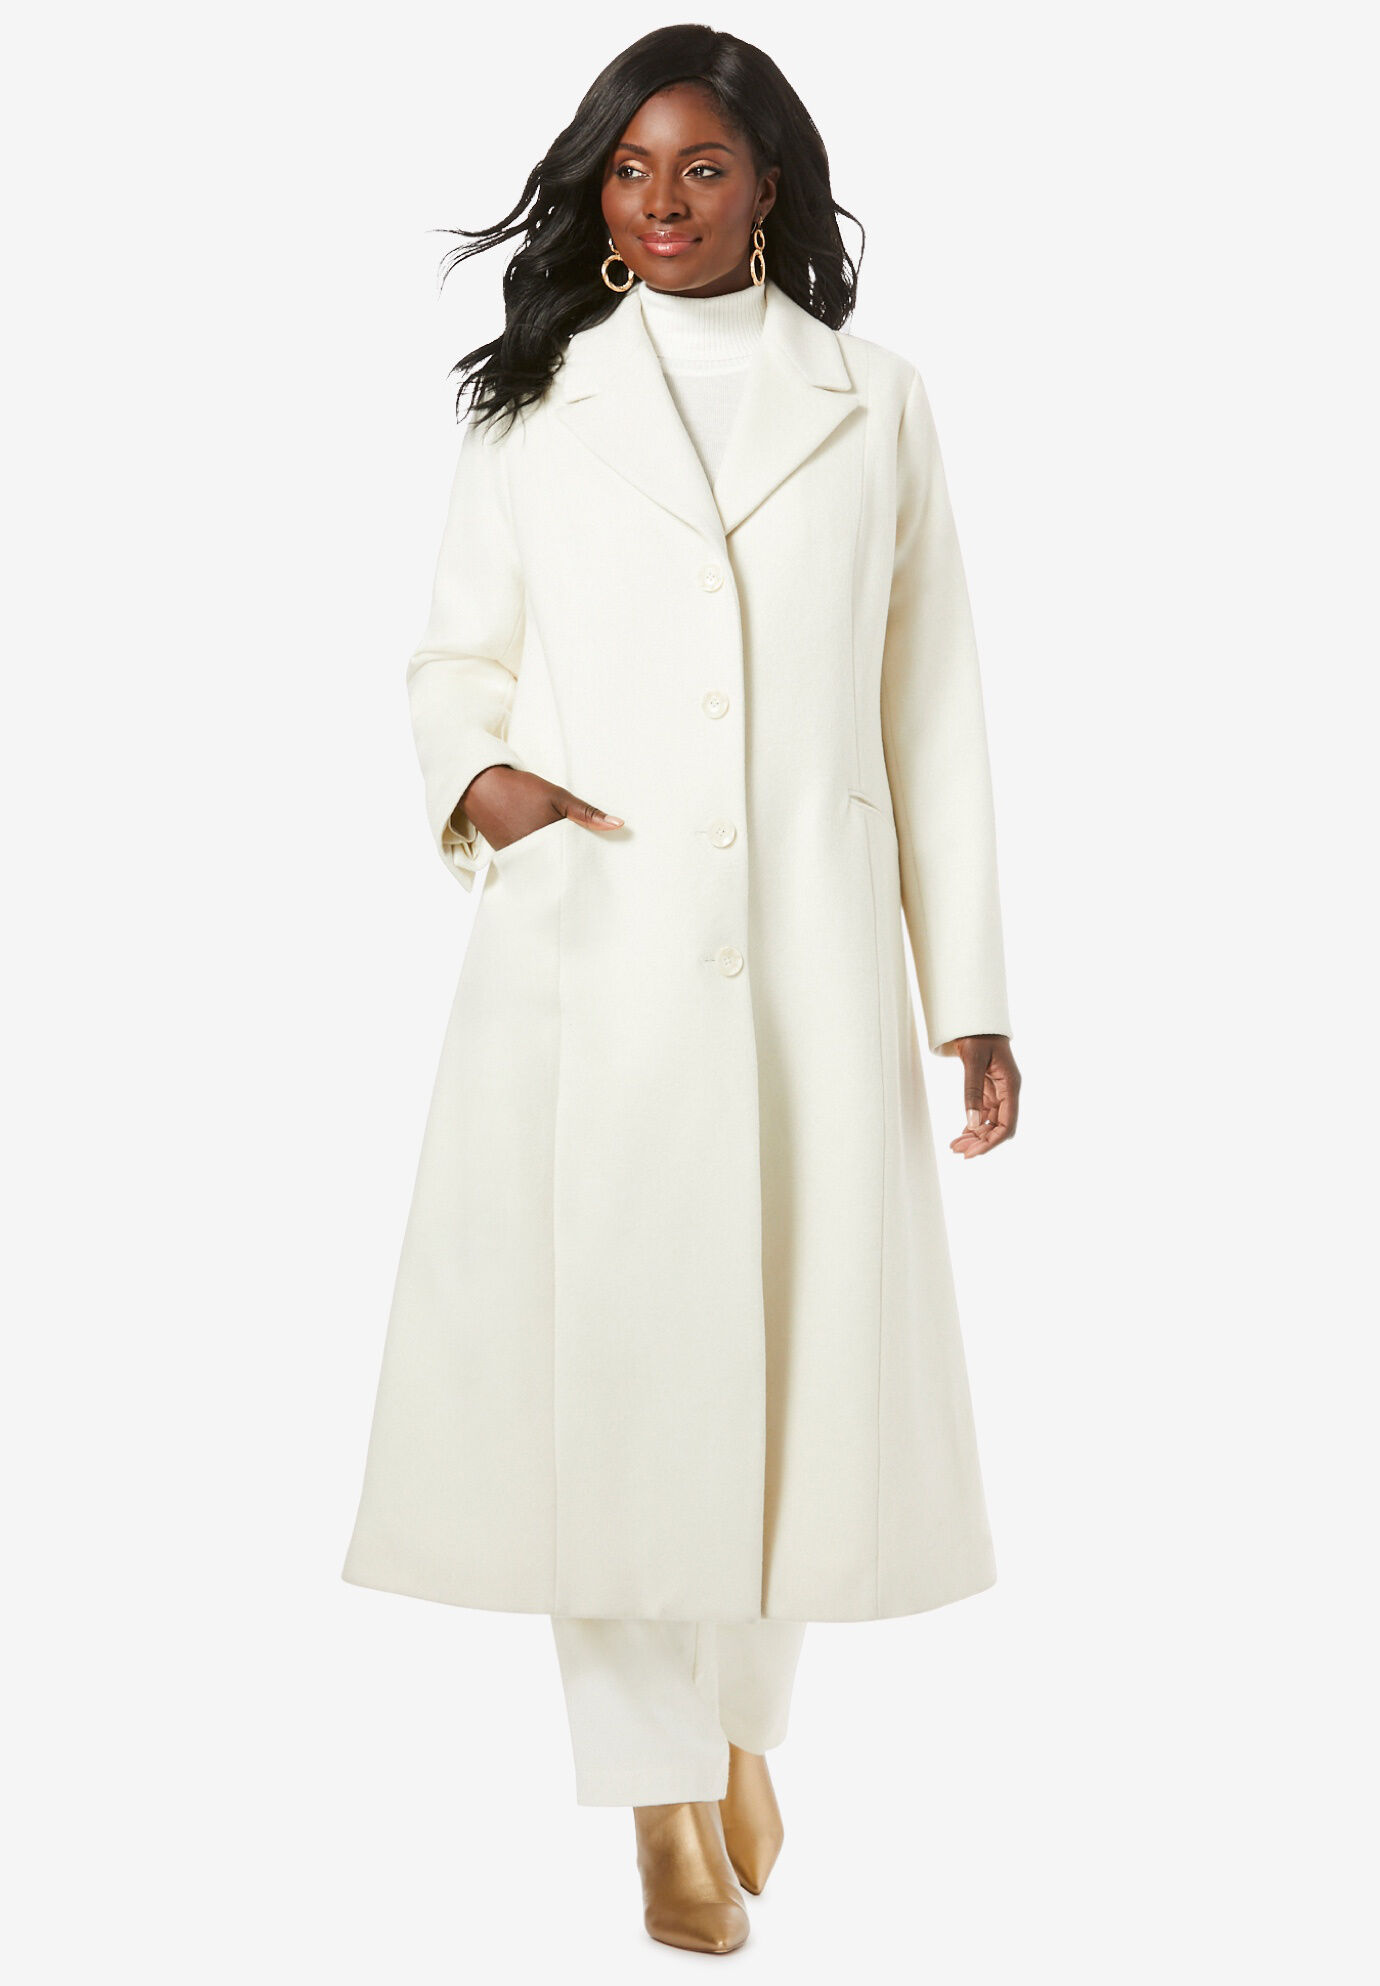 YHCWJZP Womens Coat Women Winter Long Sleeve O Neck Button Pocket Plus Size Loose Woolen Trench Coat